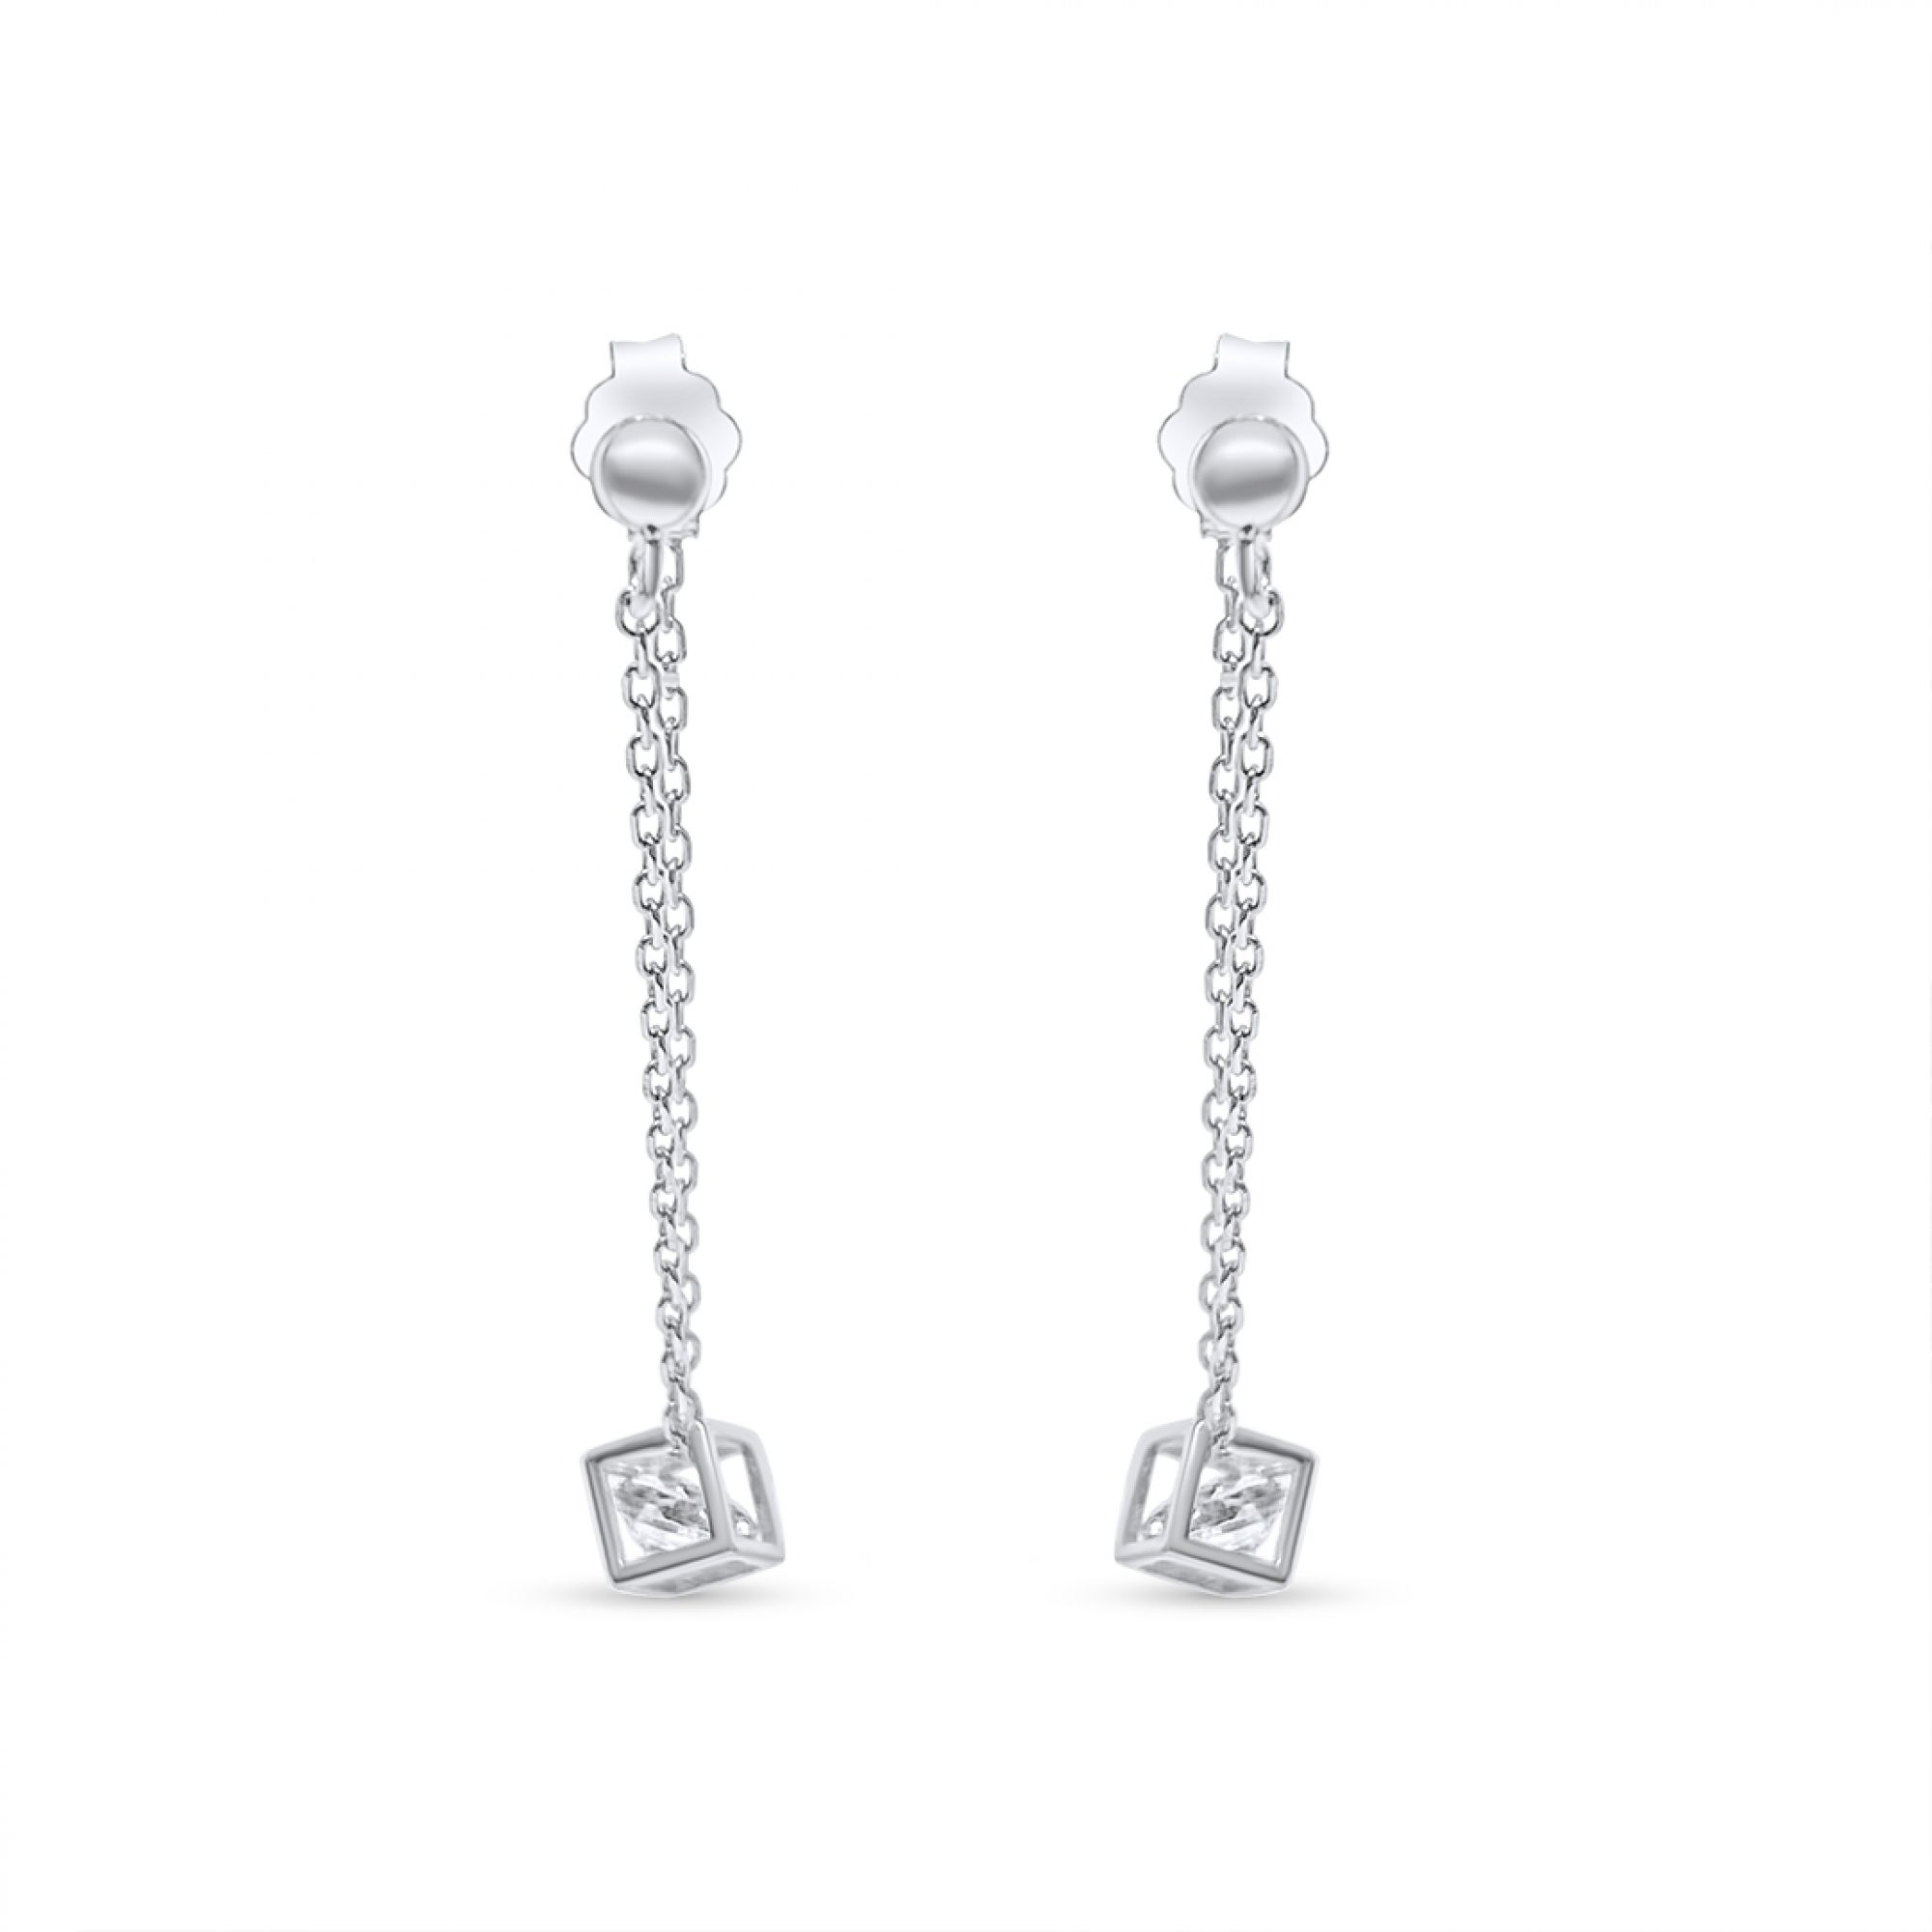 Silver earrings with zircon stones